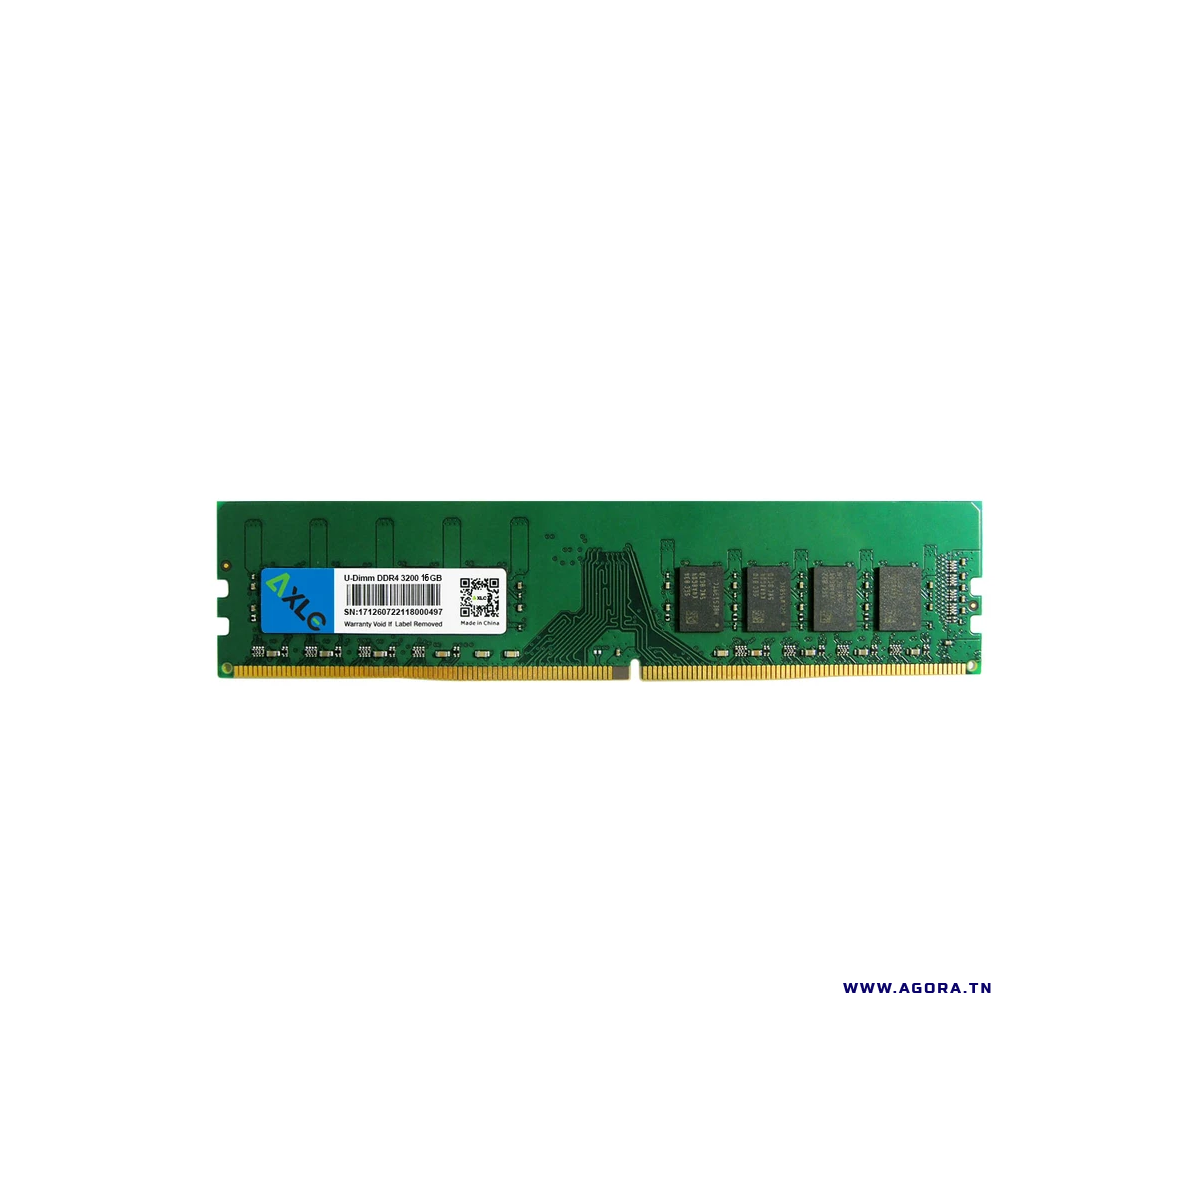 MEMOIRE 4GO DDR4 3200 MHZ POUR PC AXLE | AGORA.TN